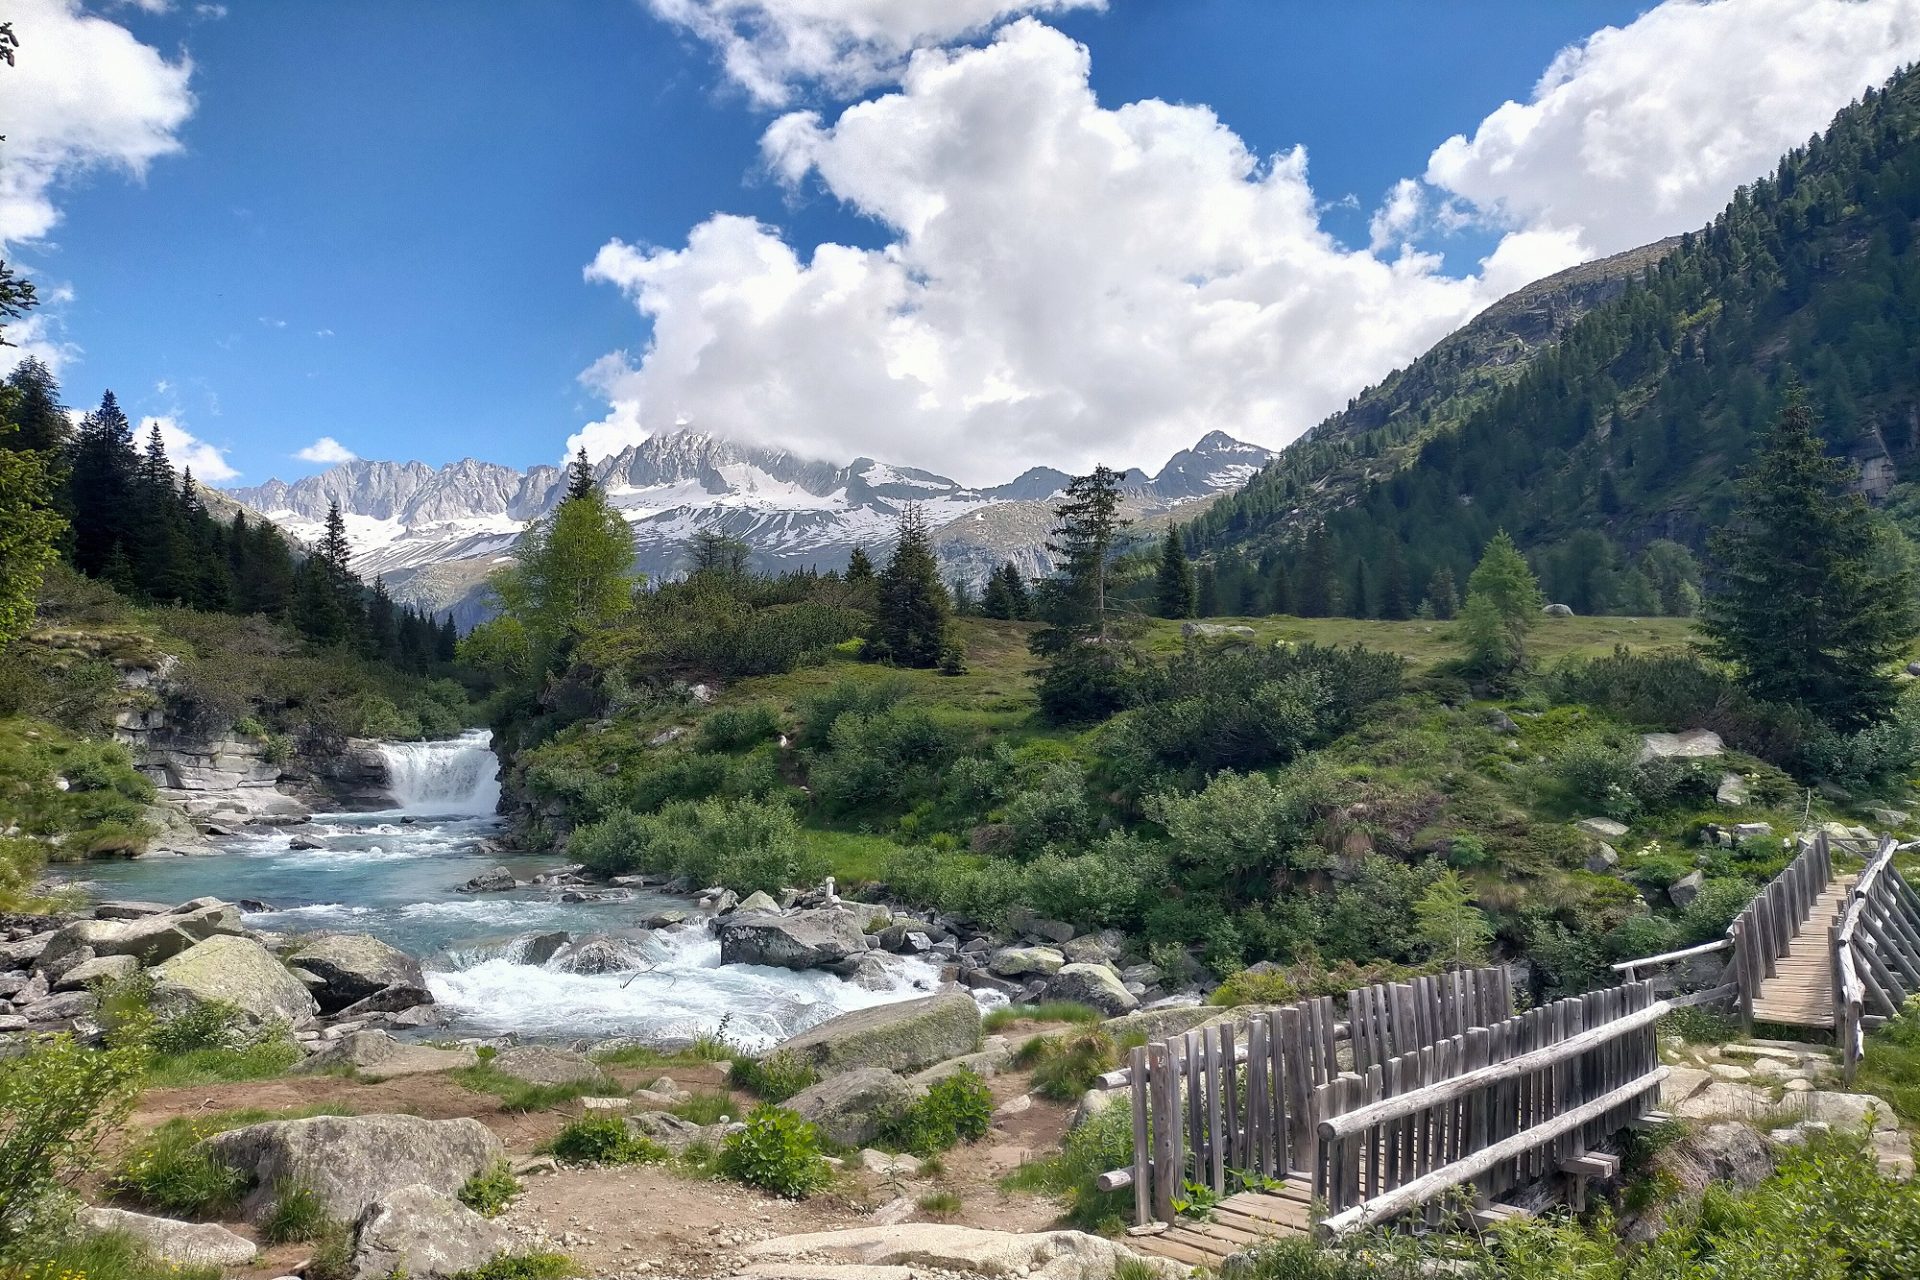 trek-mi-adamello-brenta-natural-park-hiking-fumo-valley